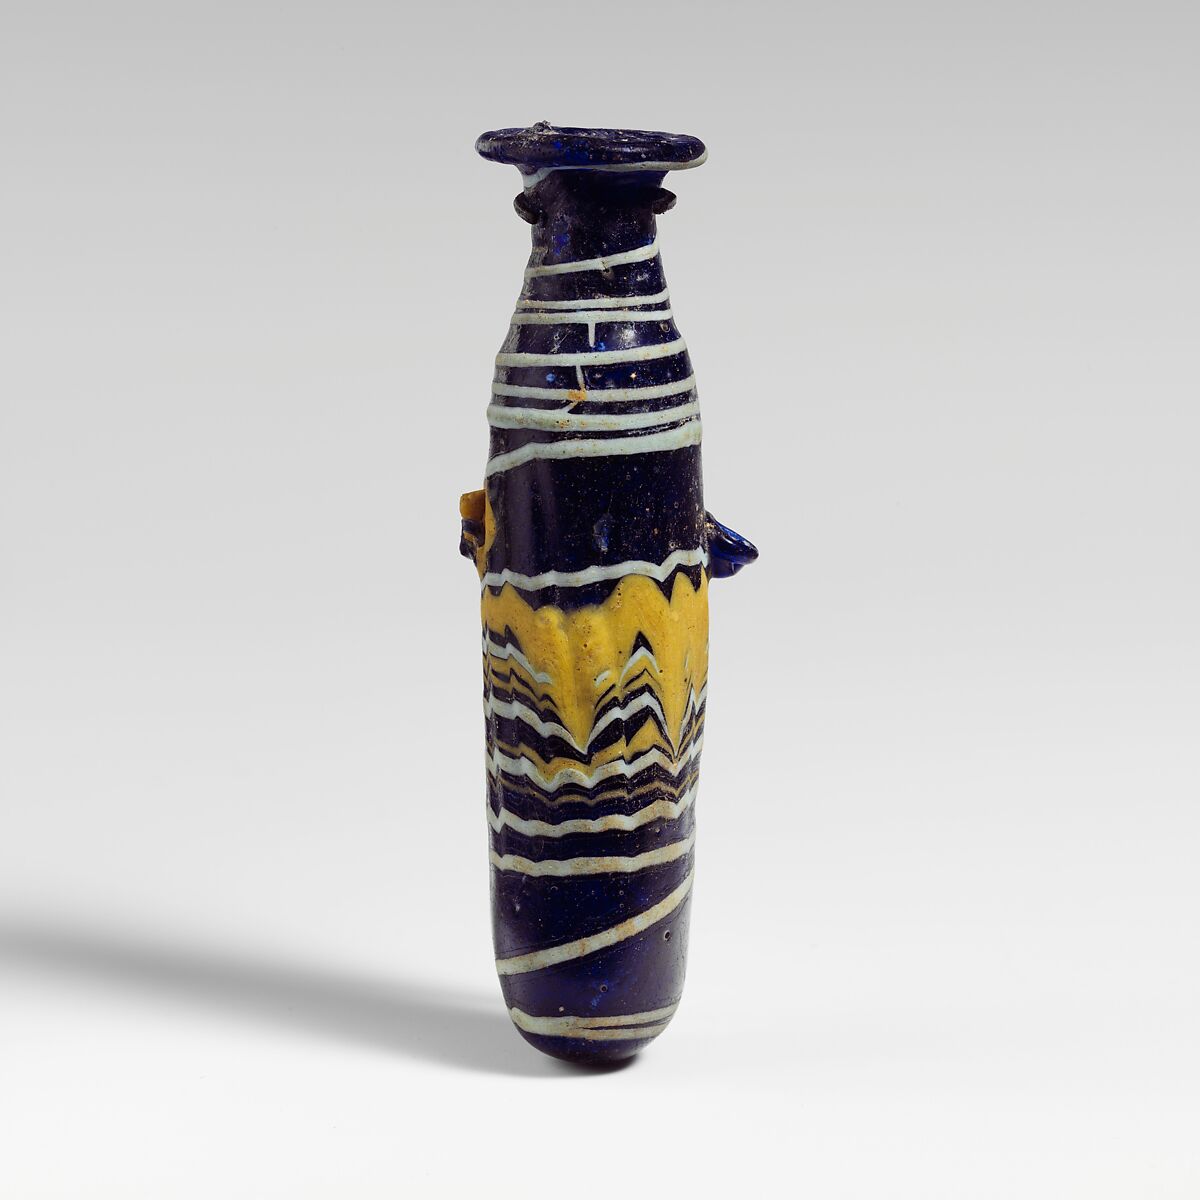 Glass alabastron (perfume bottle), Glass, Greek, Eastern Mediterranean 